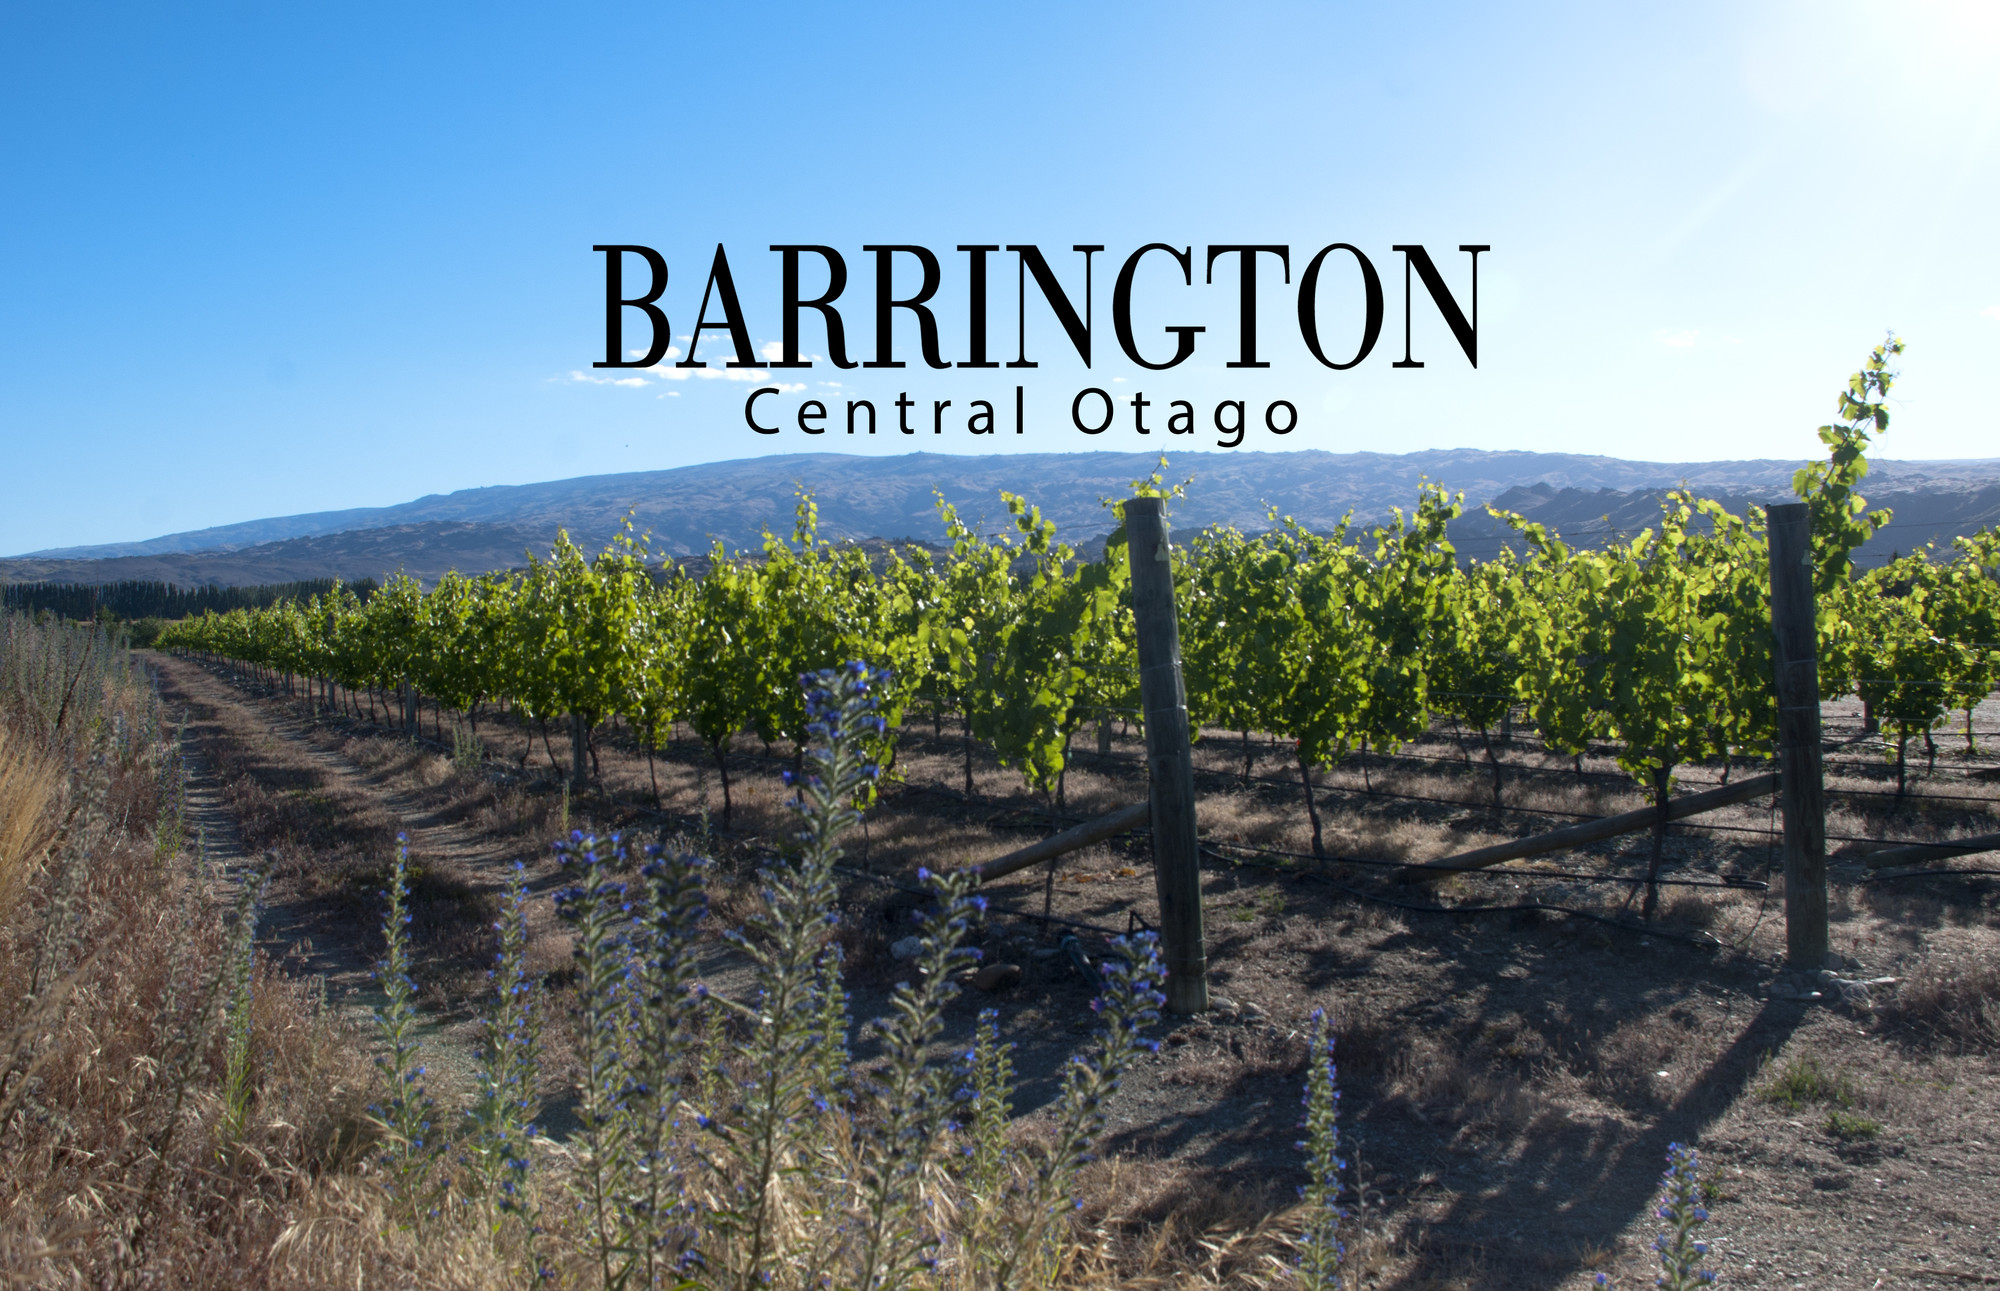 Barrington Wines in Central Otago